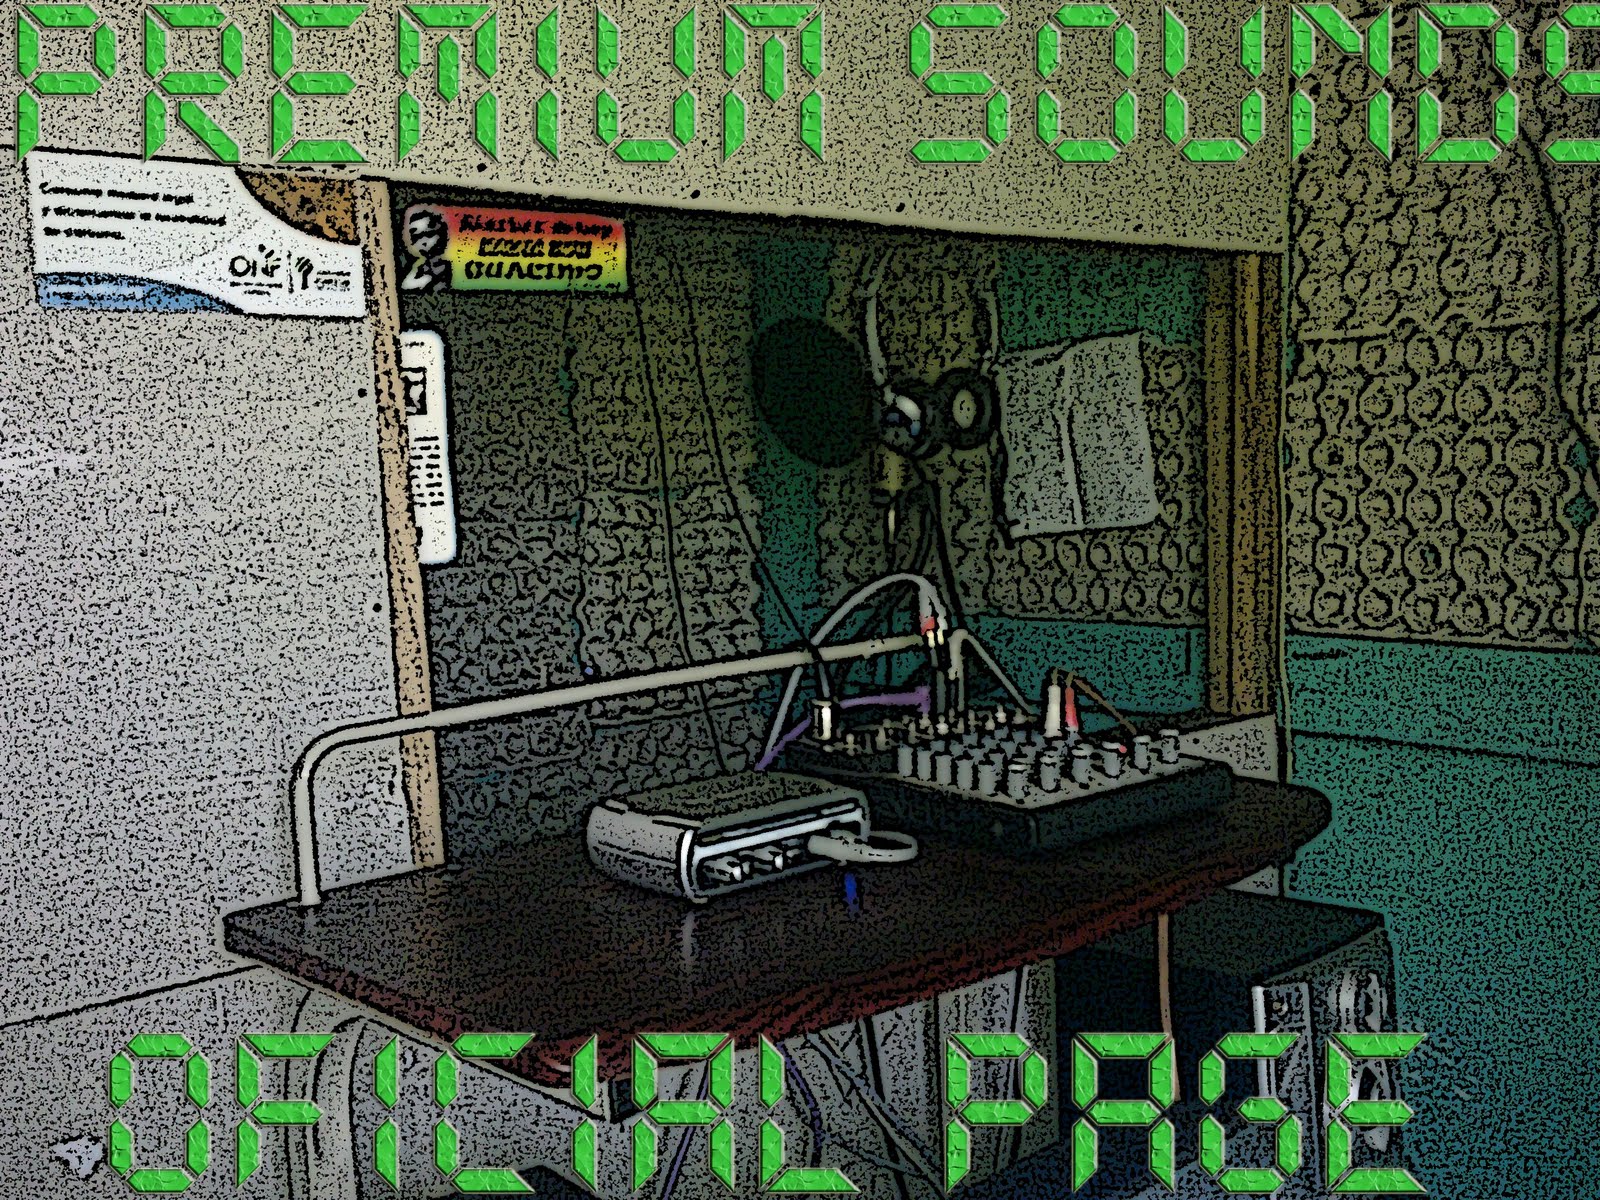 Premium Sounds Records